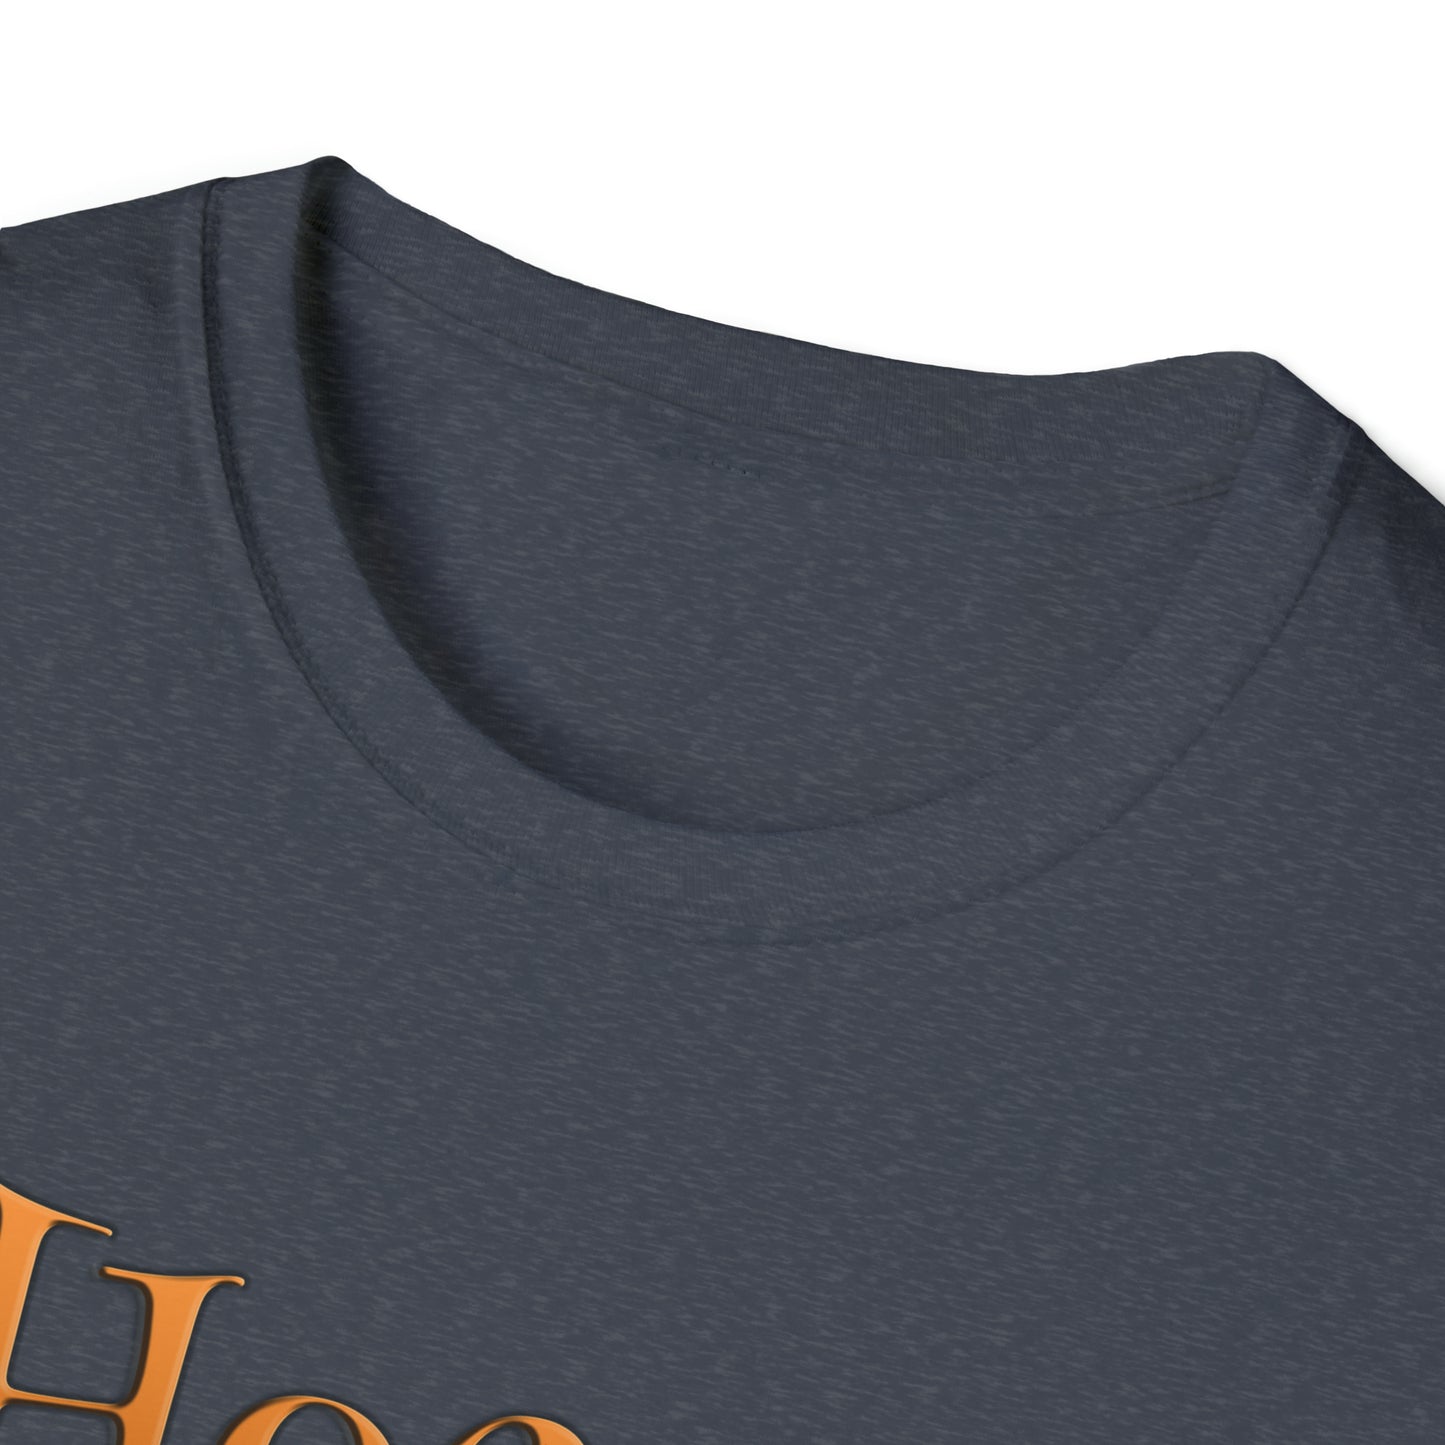 Hocus POCUS Unisex Softstyle T-Shirt